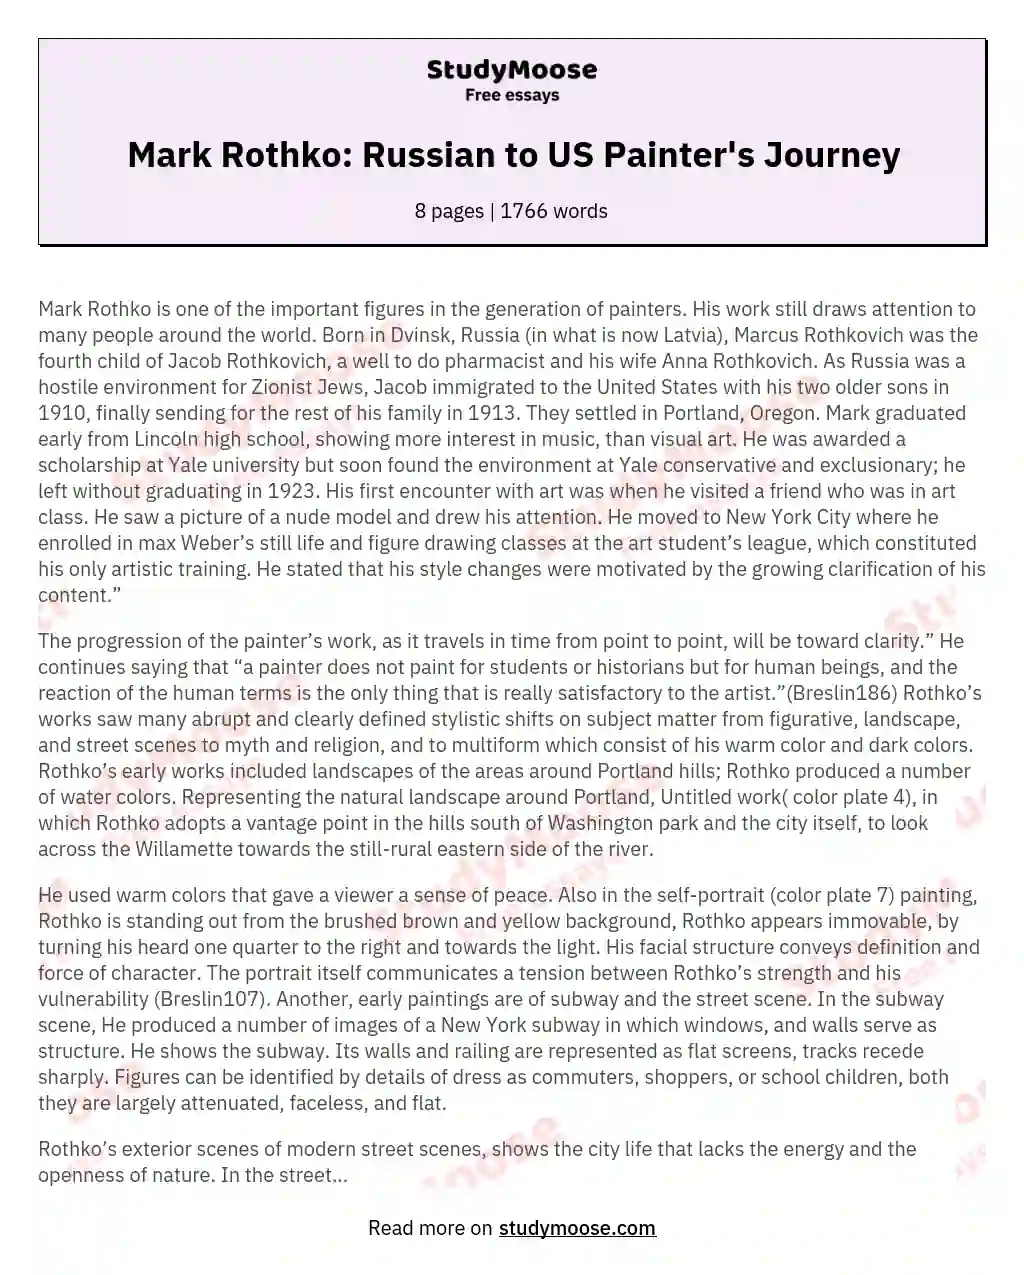 Mark Rothko: A Journey Through Art essay